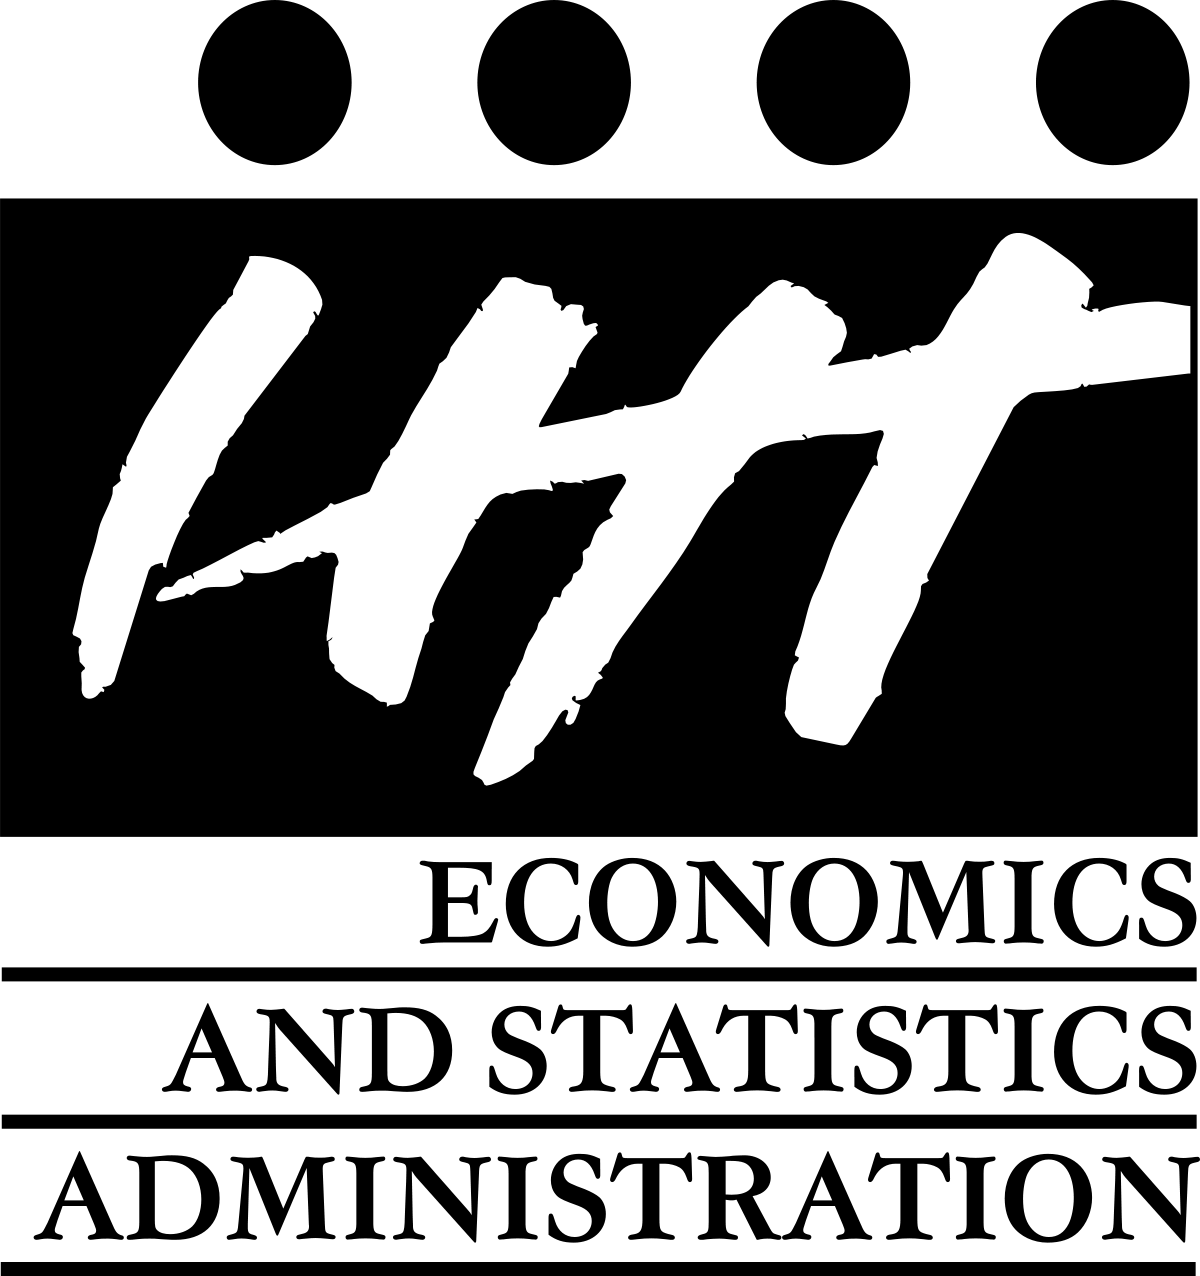 Administration Logo - Economics and Statistics Administration